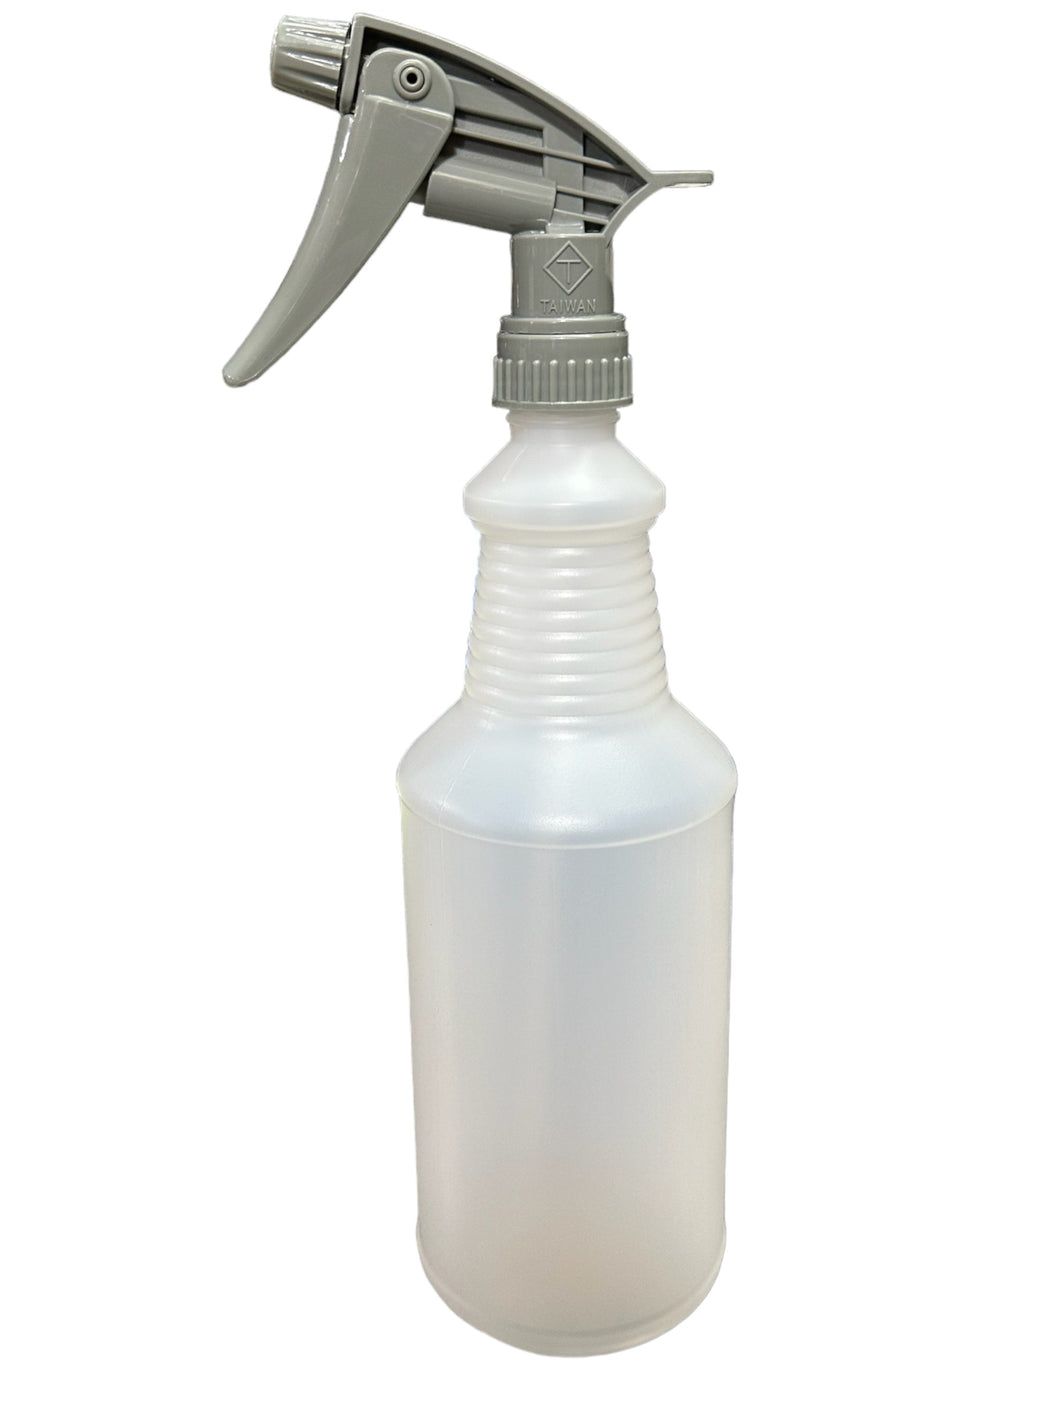 32 oz Spray Bottle with Chemical Resistant Trigger Sprayer